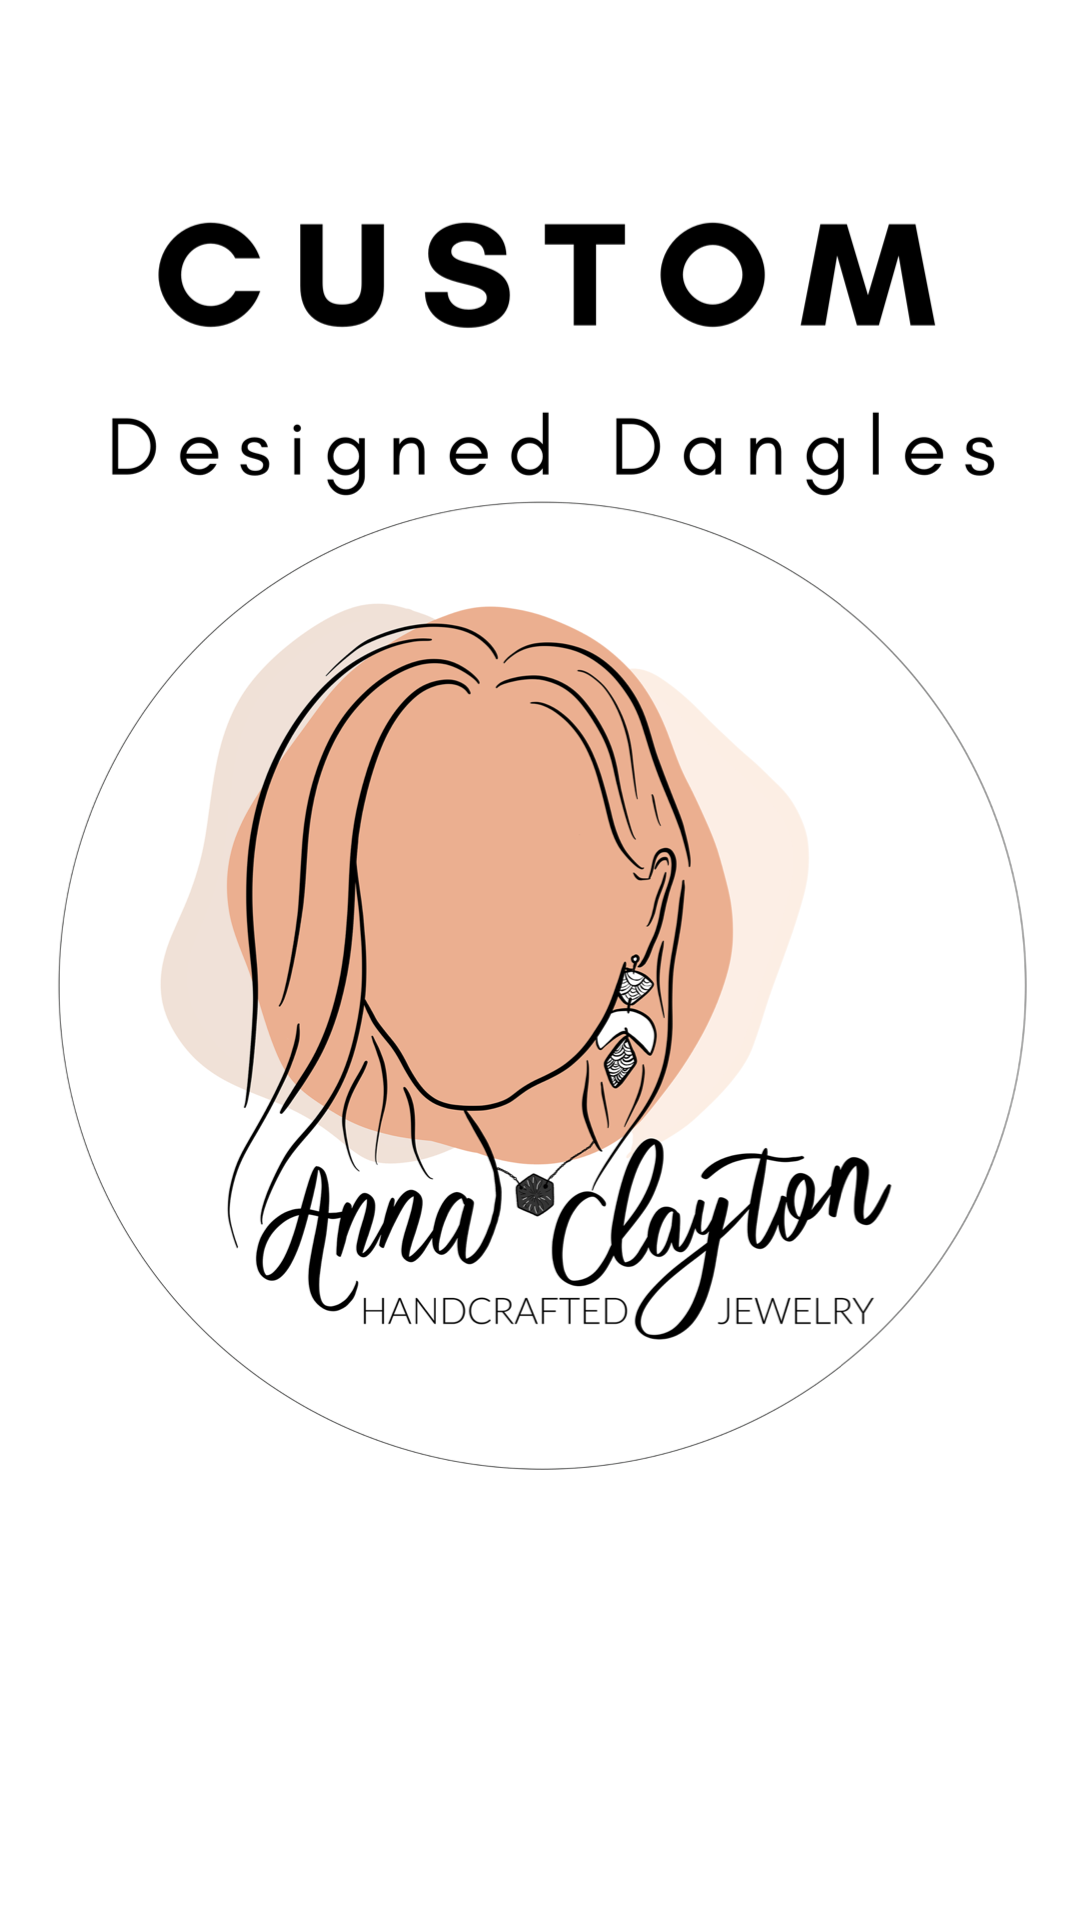 Custom Dangles - Design and Crafting